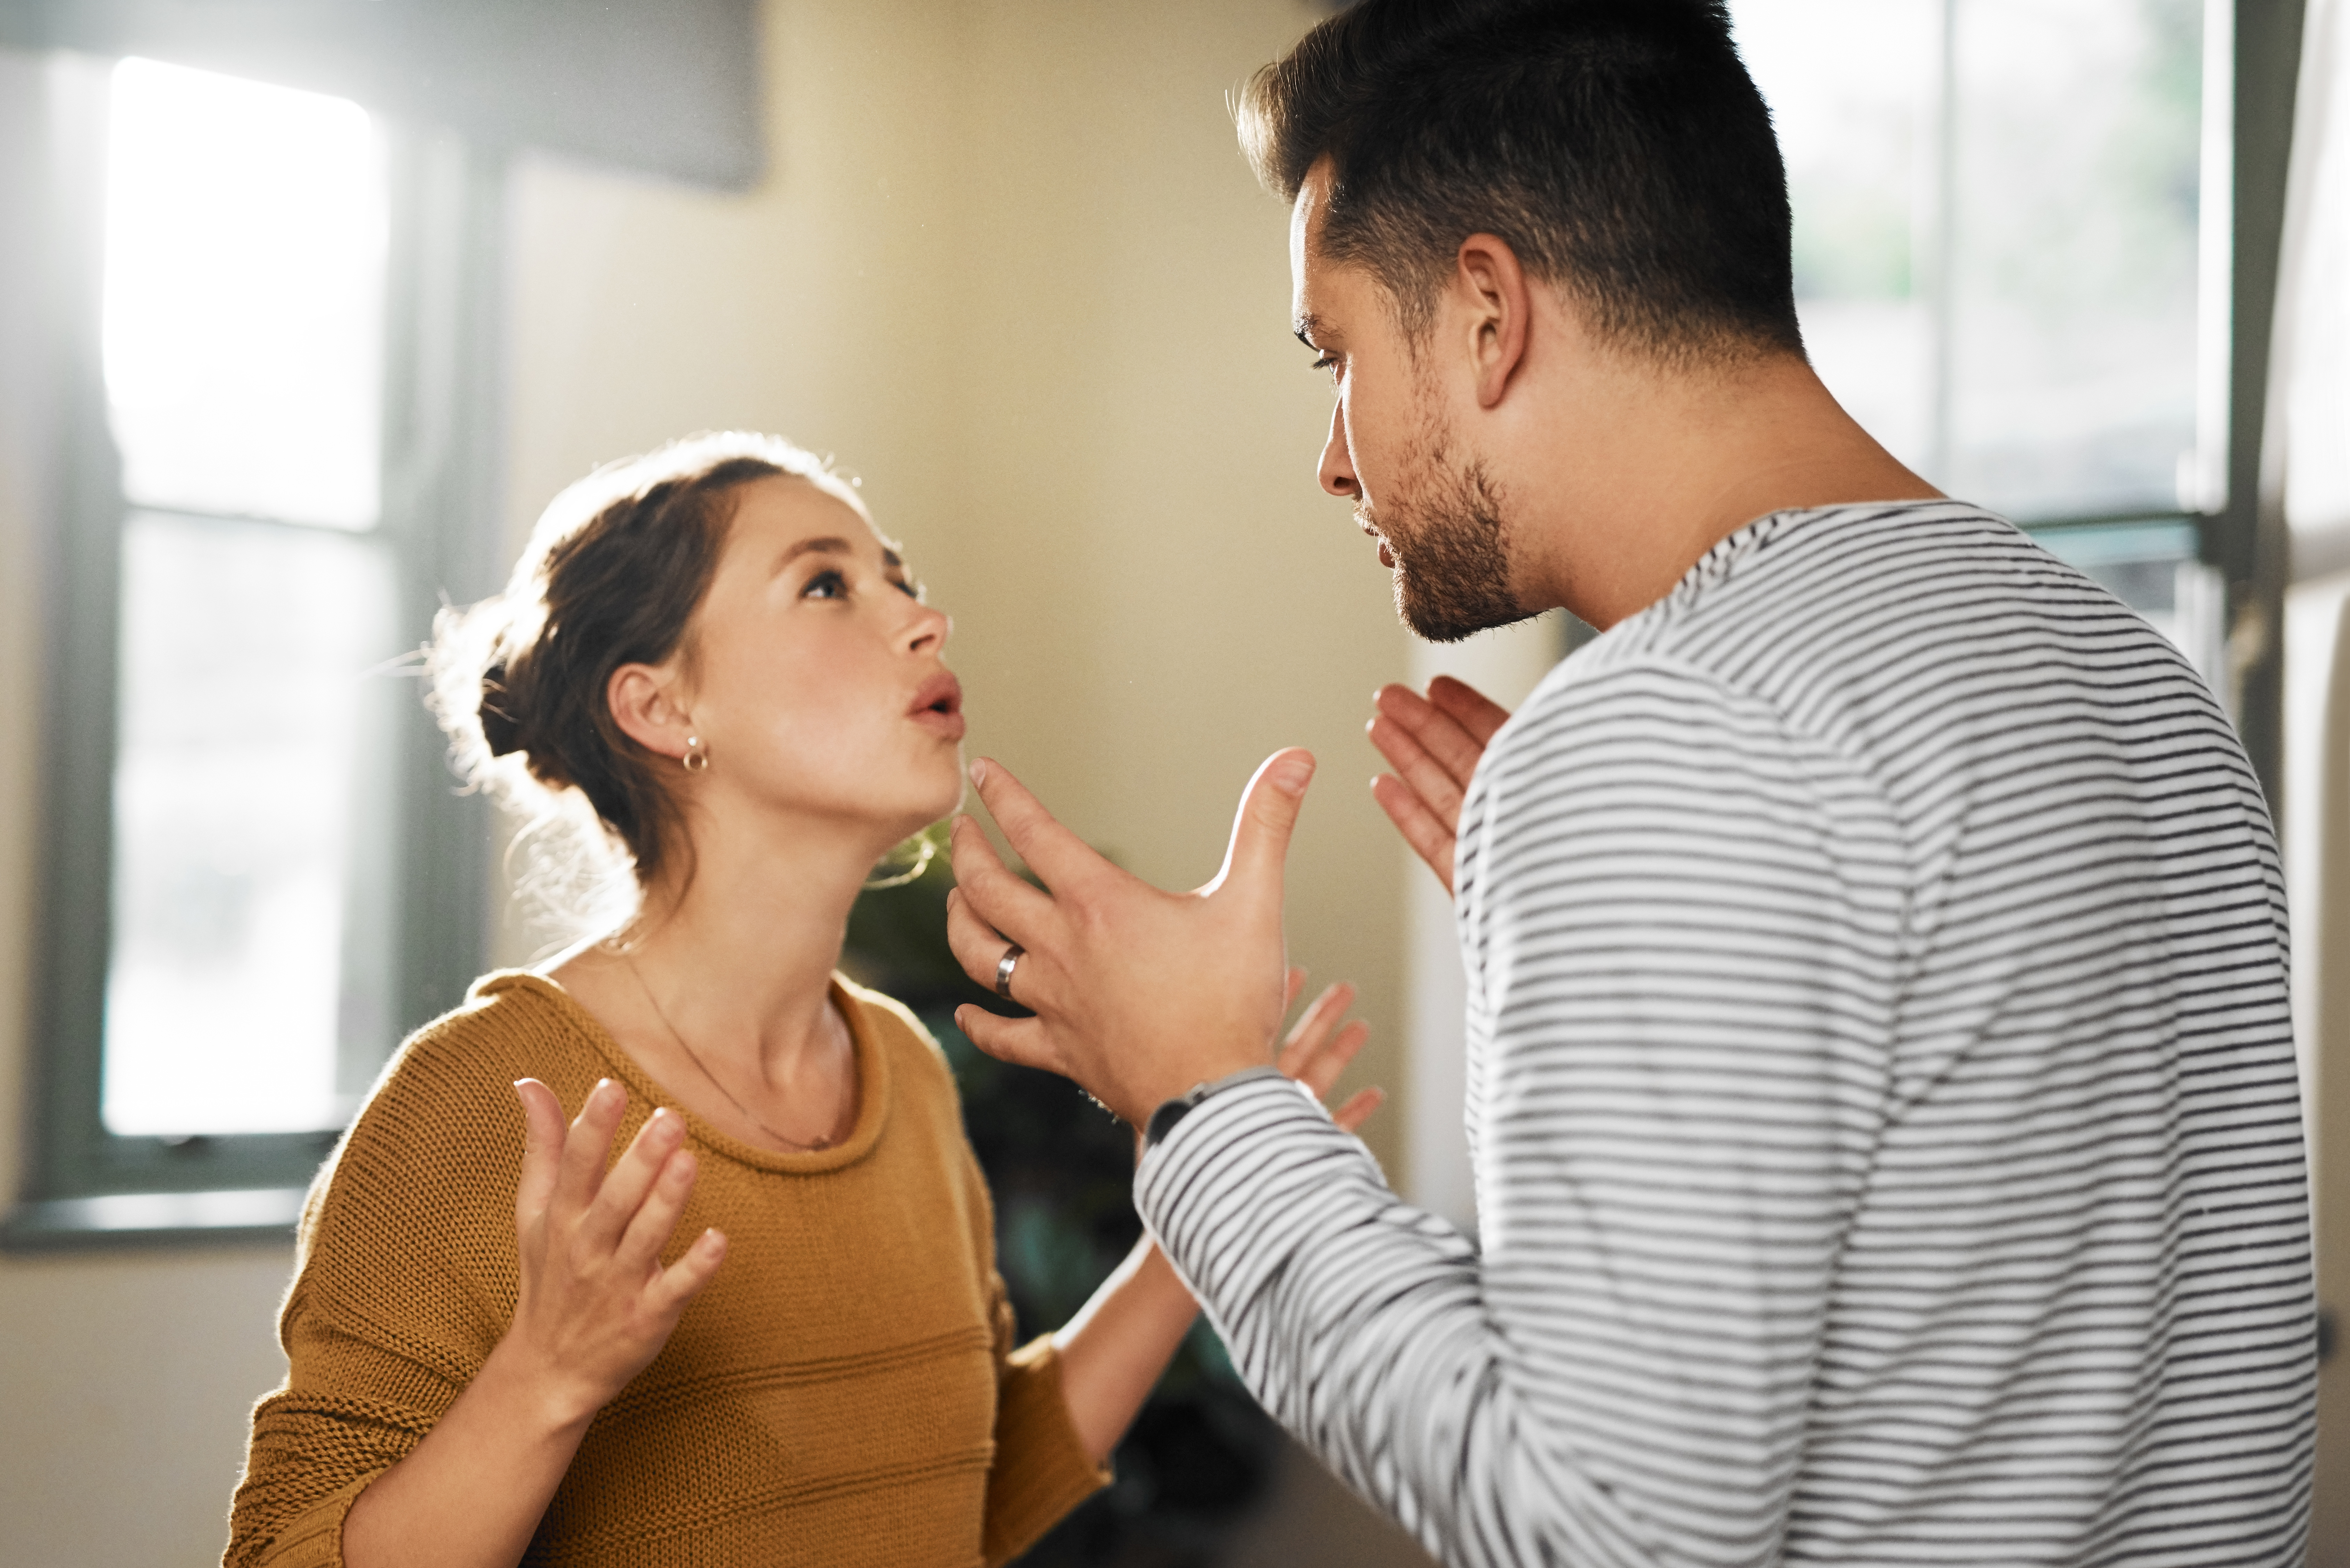 Un couple qui se dispute | Source : Shutterstock